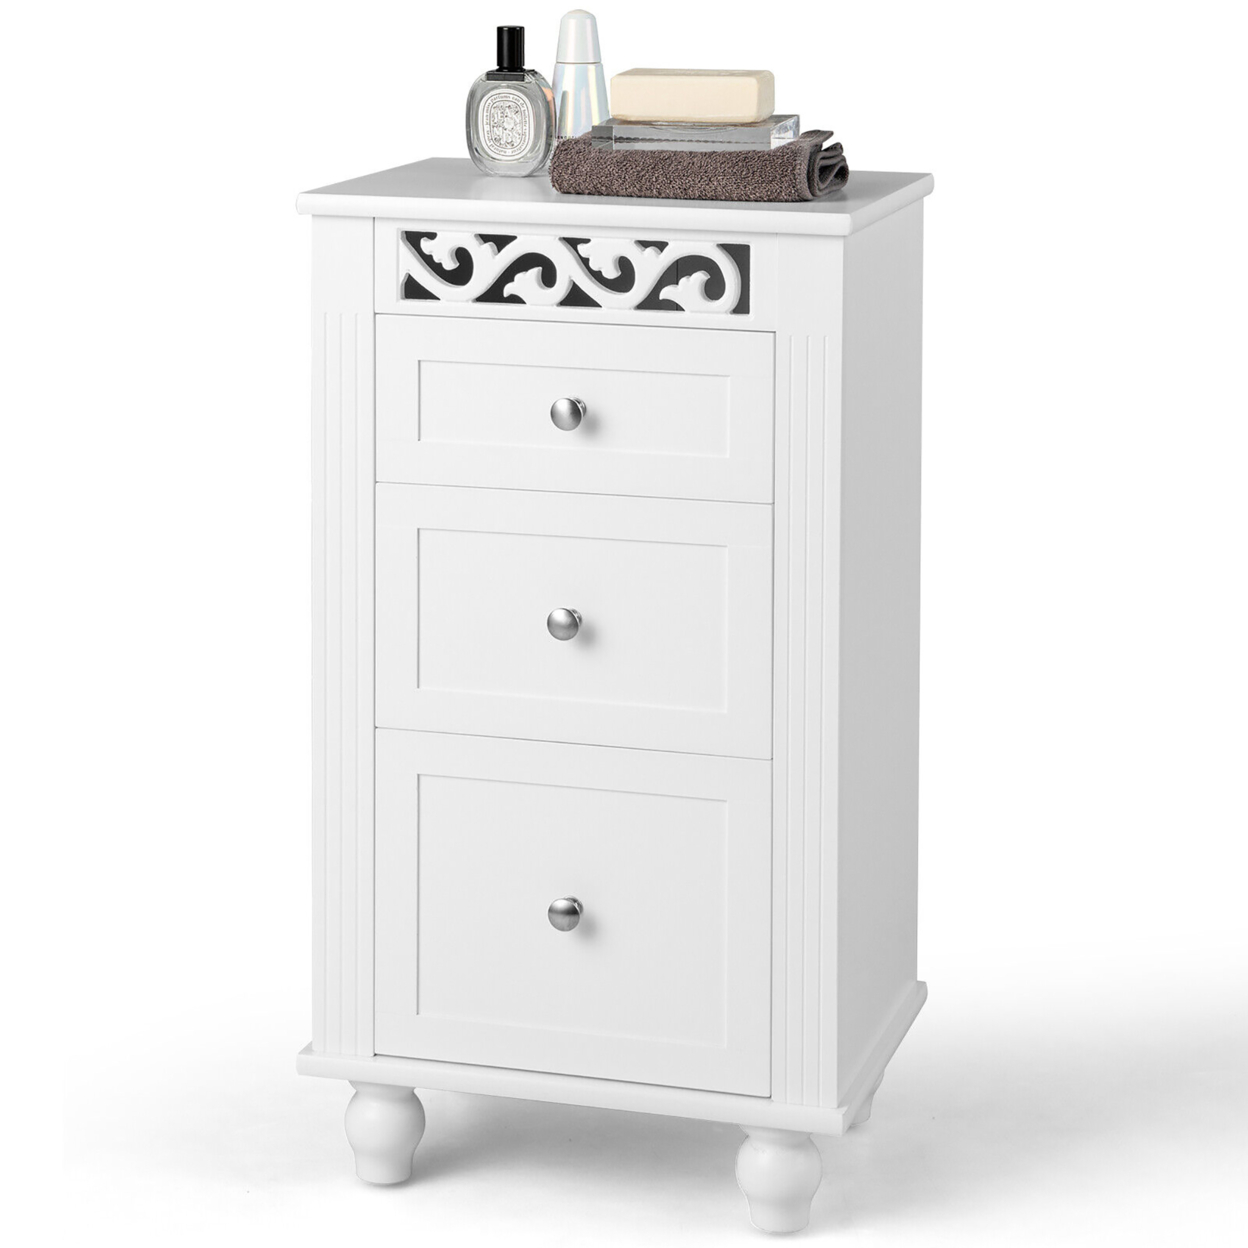 Bathroom Floor Cabinet Storage Organizer Nightstand Carved Design W/ 3 Drawers